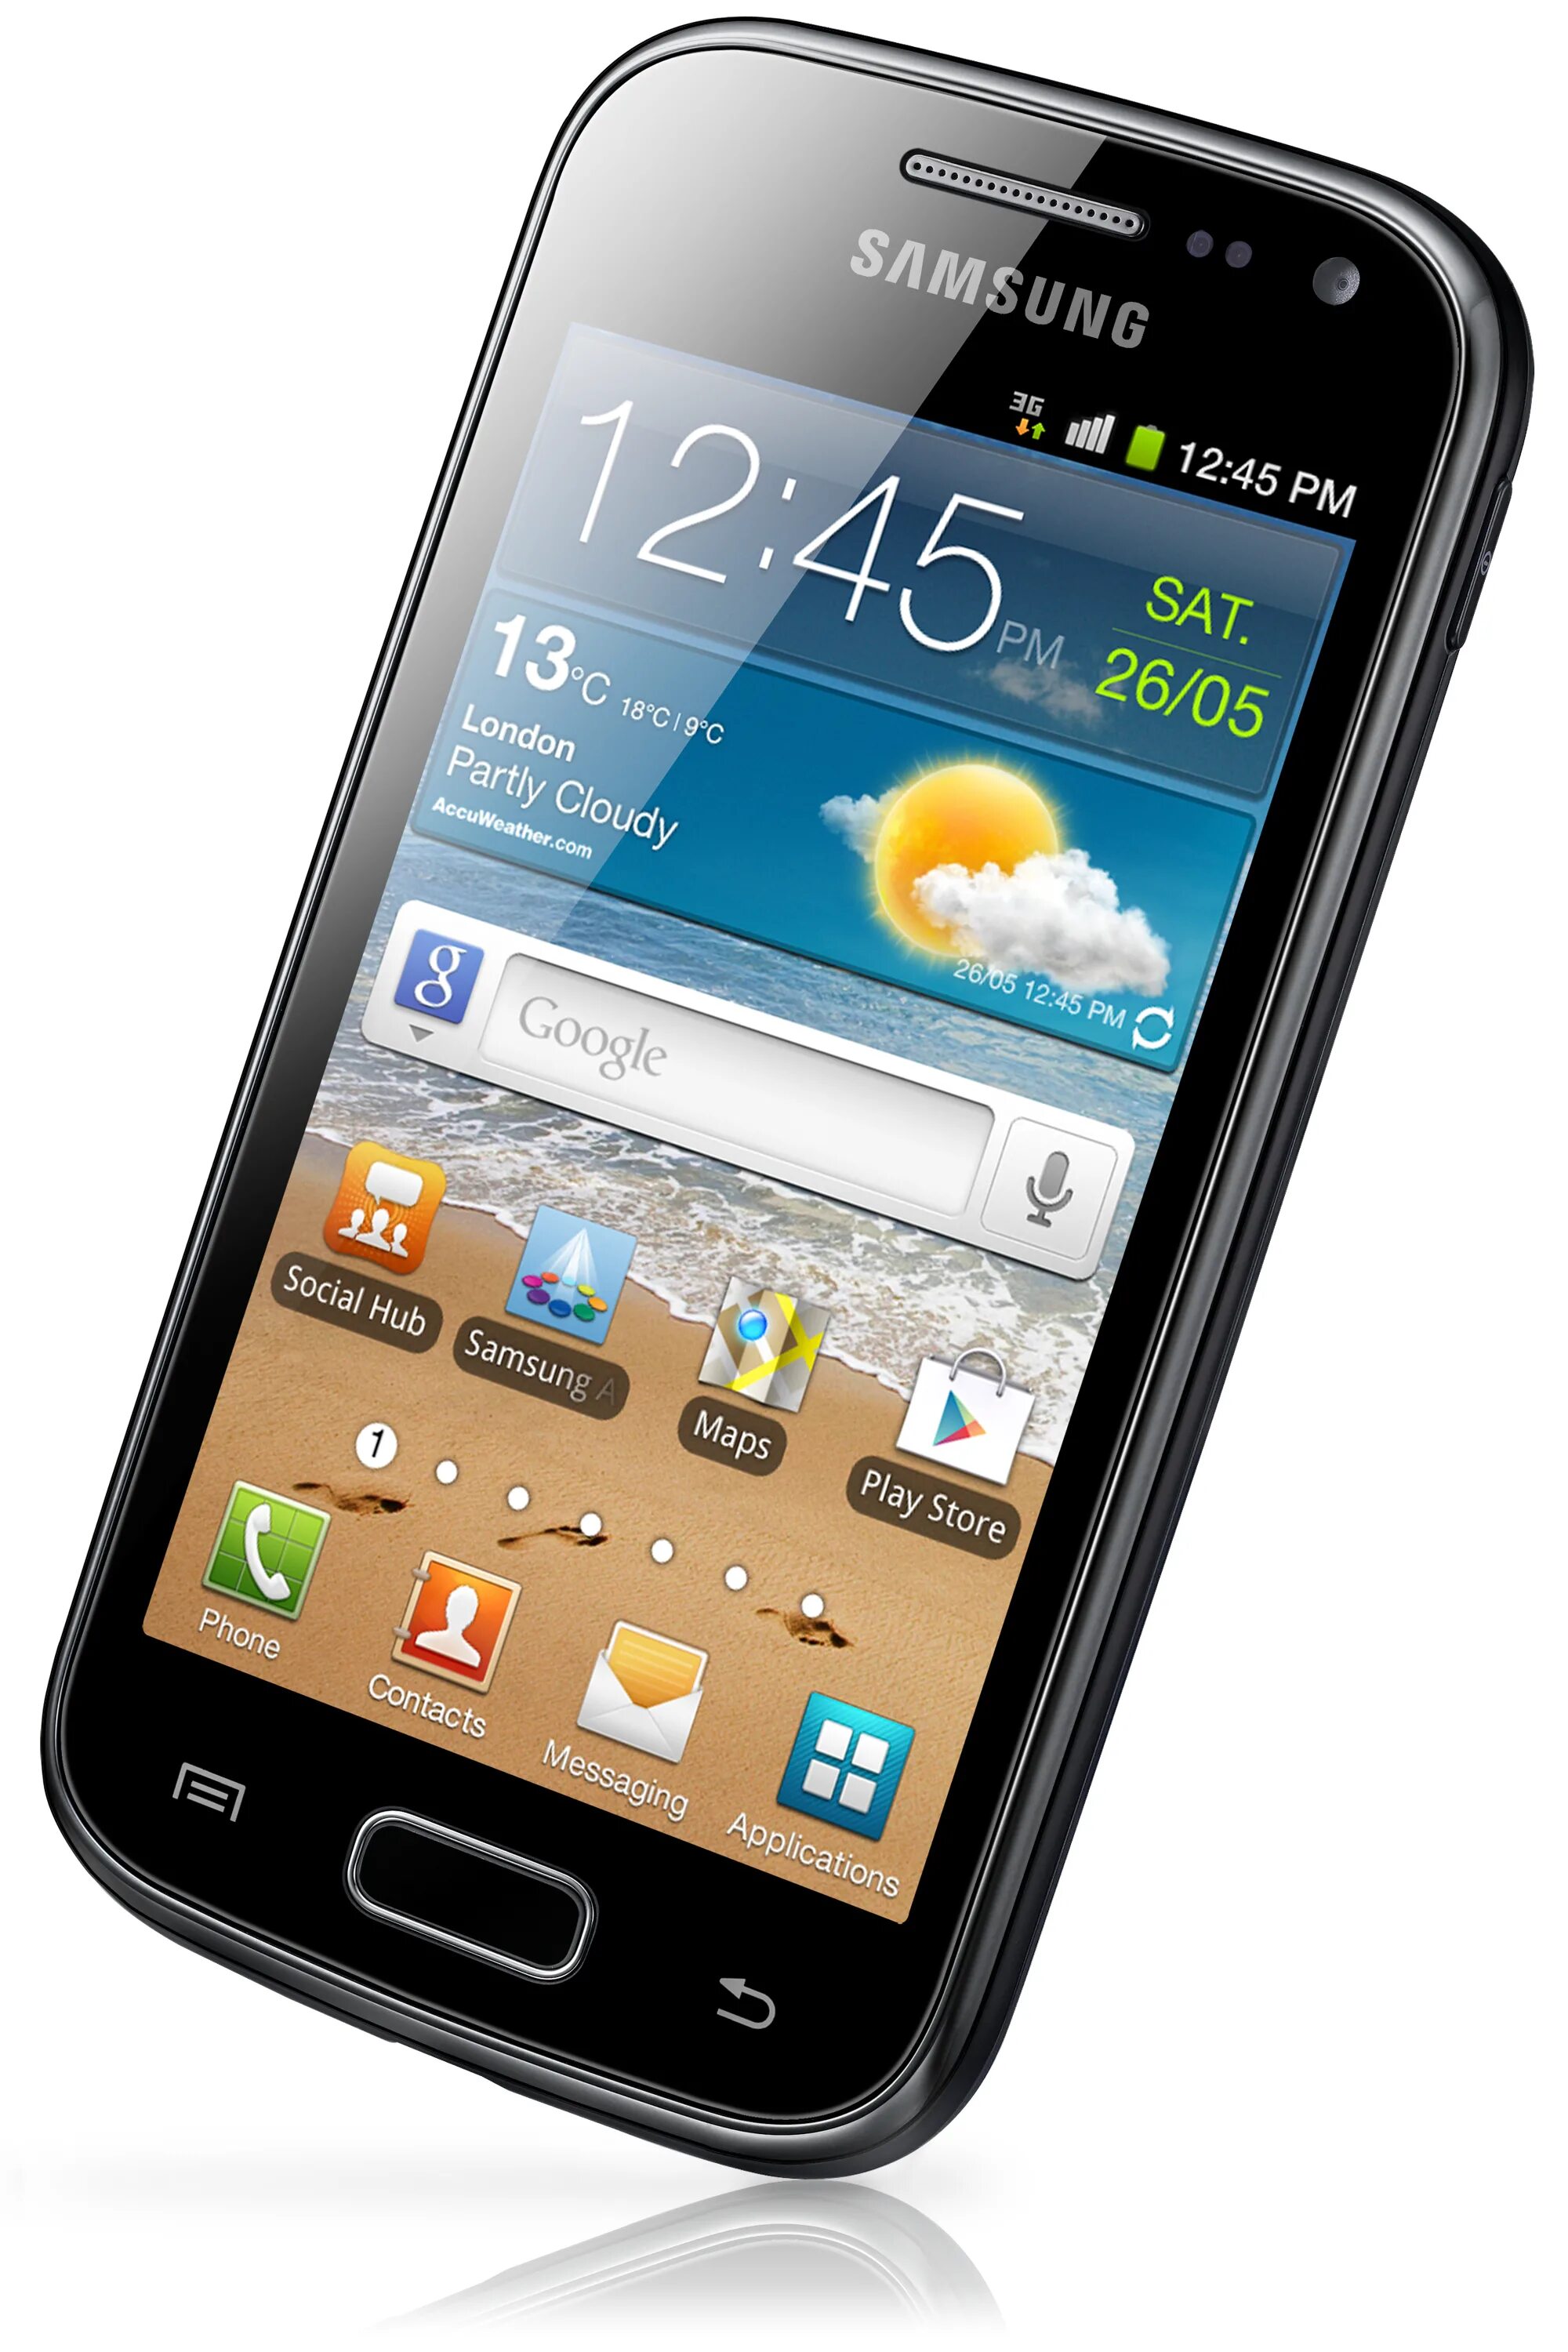 Samsung Galaxy Ace 2. Samsung gt-i8160. Самсунг галакси Ace. Самсунг галакси асе 2 gt-i8160. Айс 2с